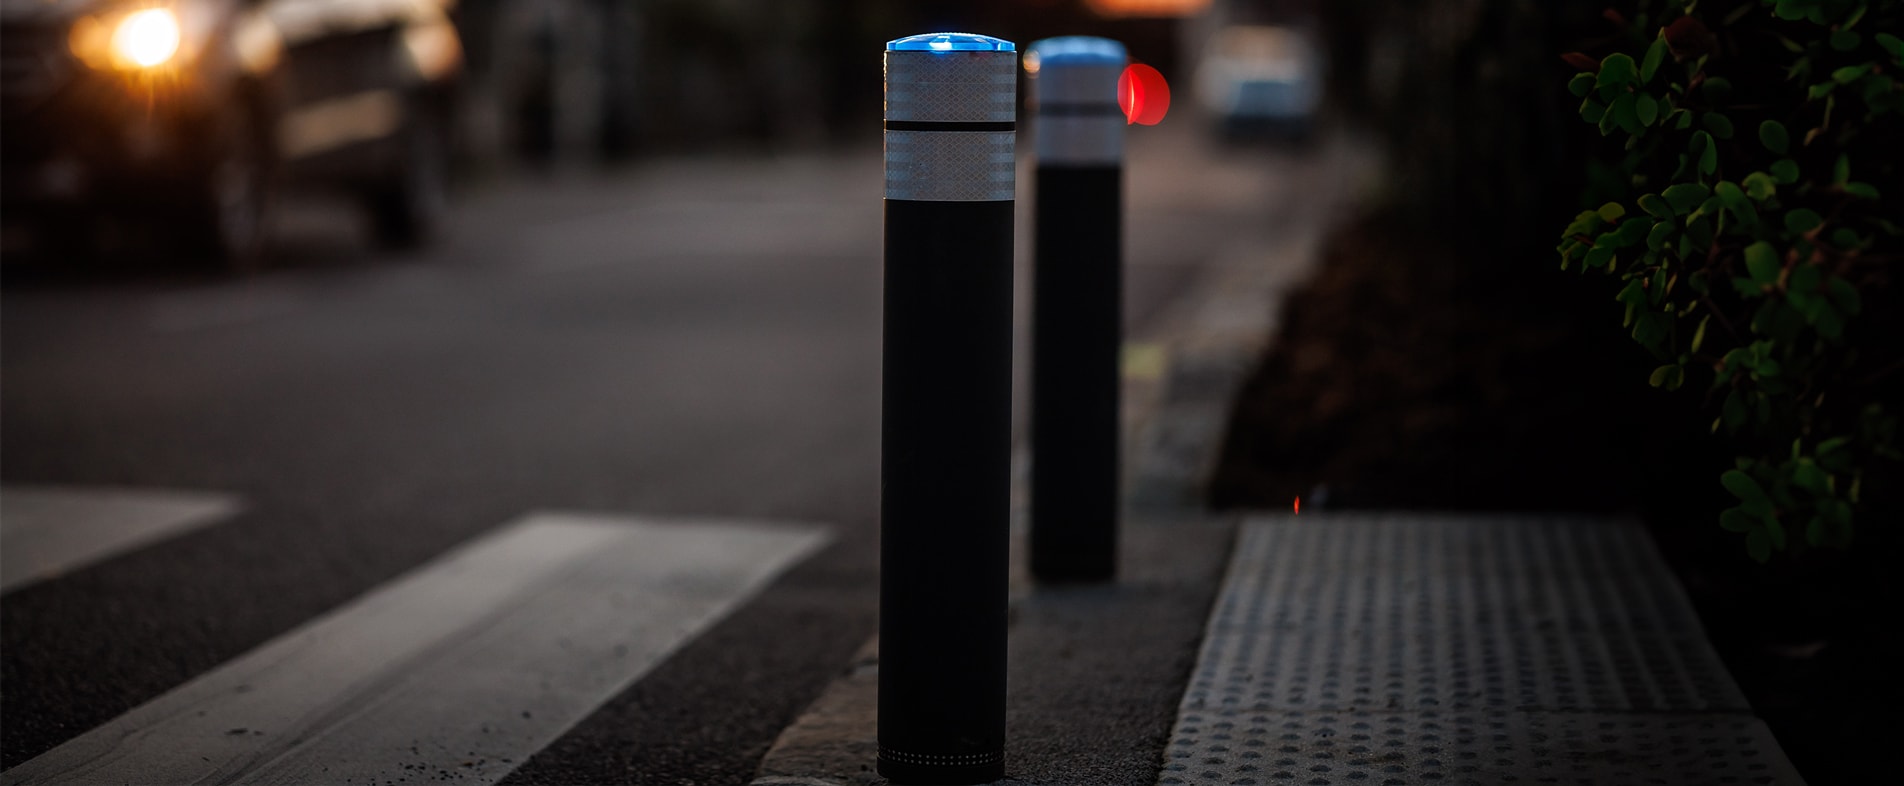 Pedestrian crossing protection with flexible solar bollards - ECO-CITY 35 Eco-Innov